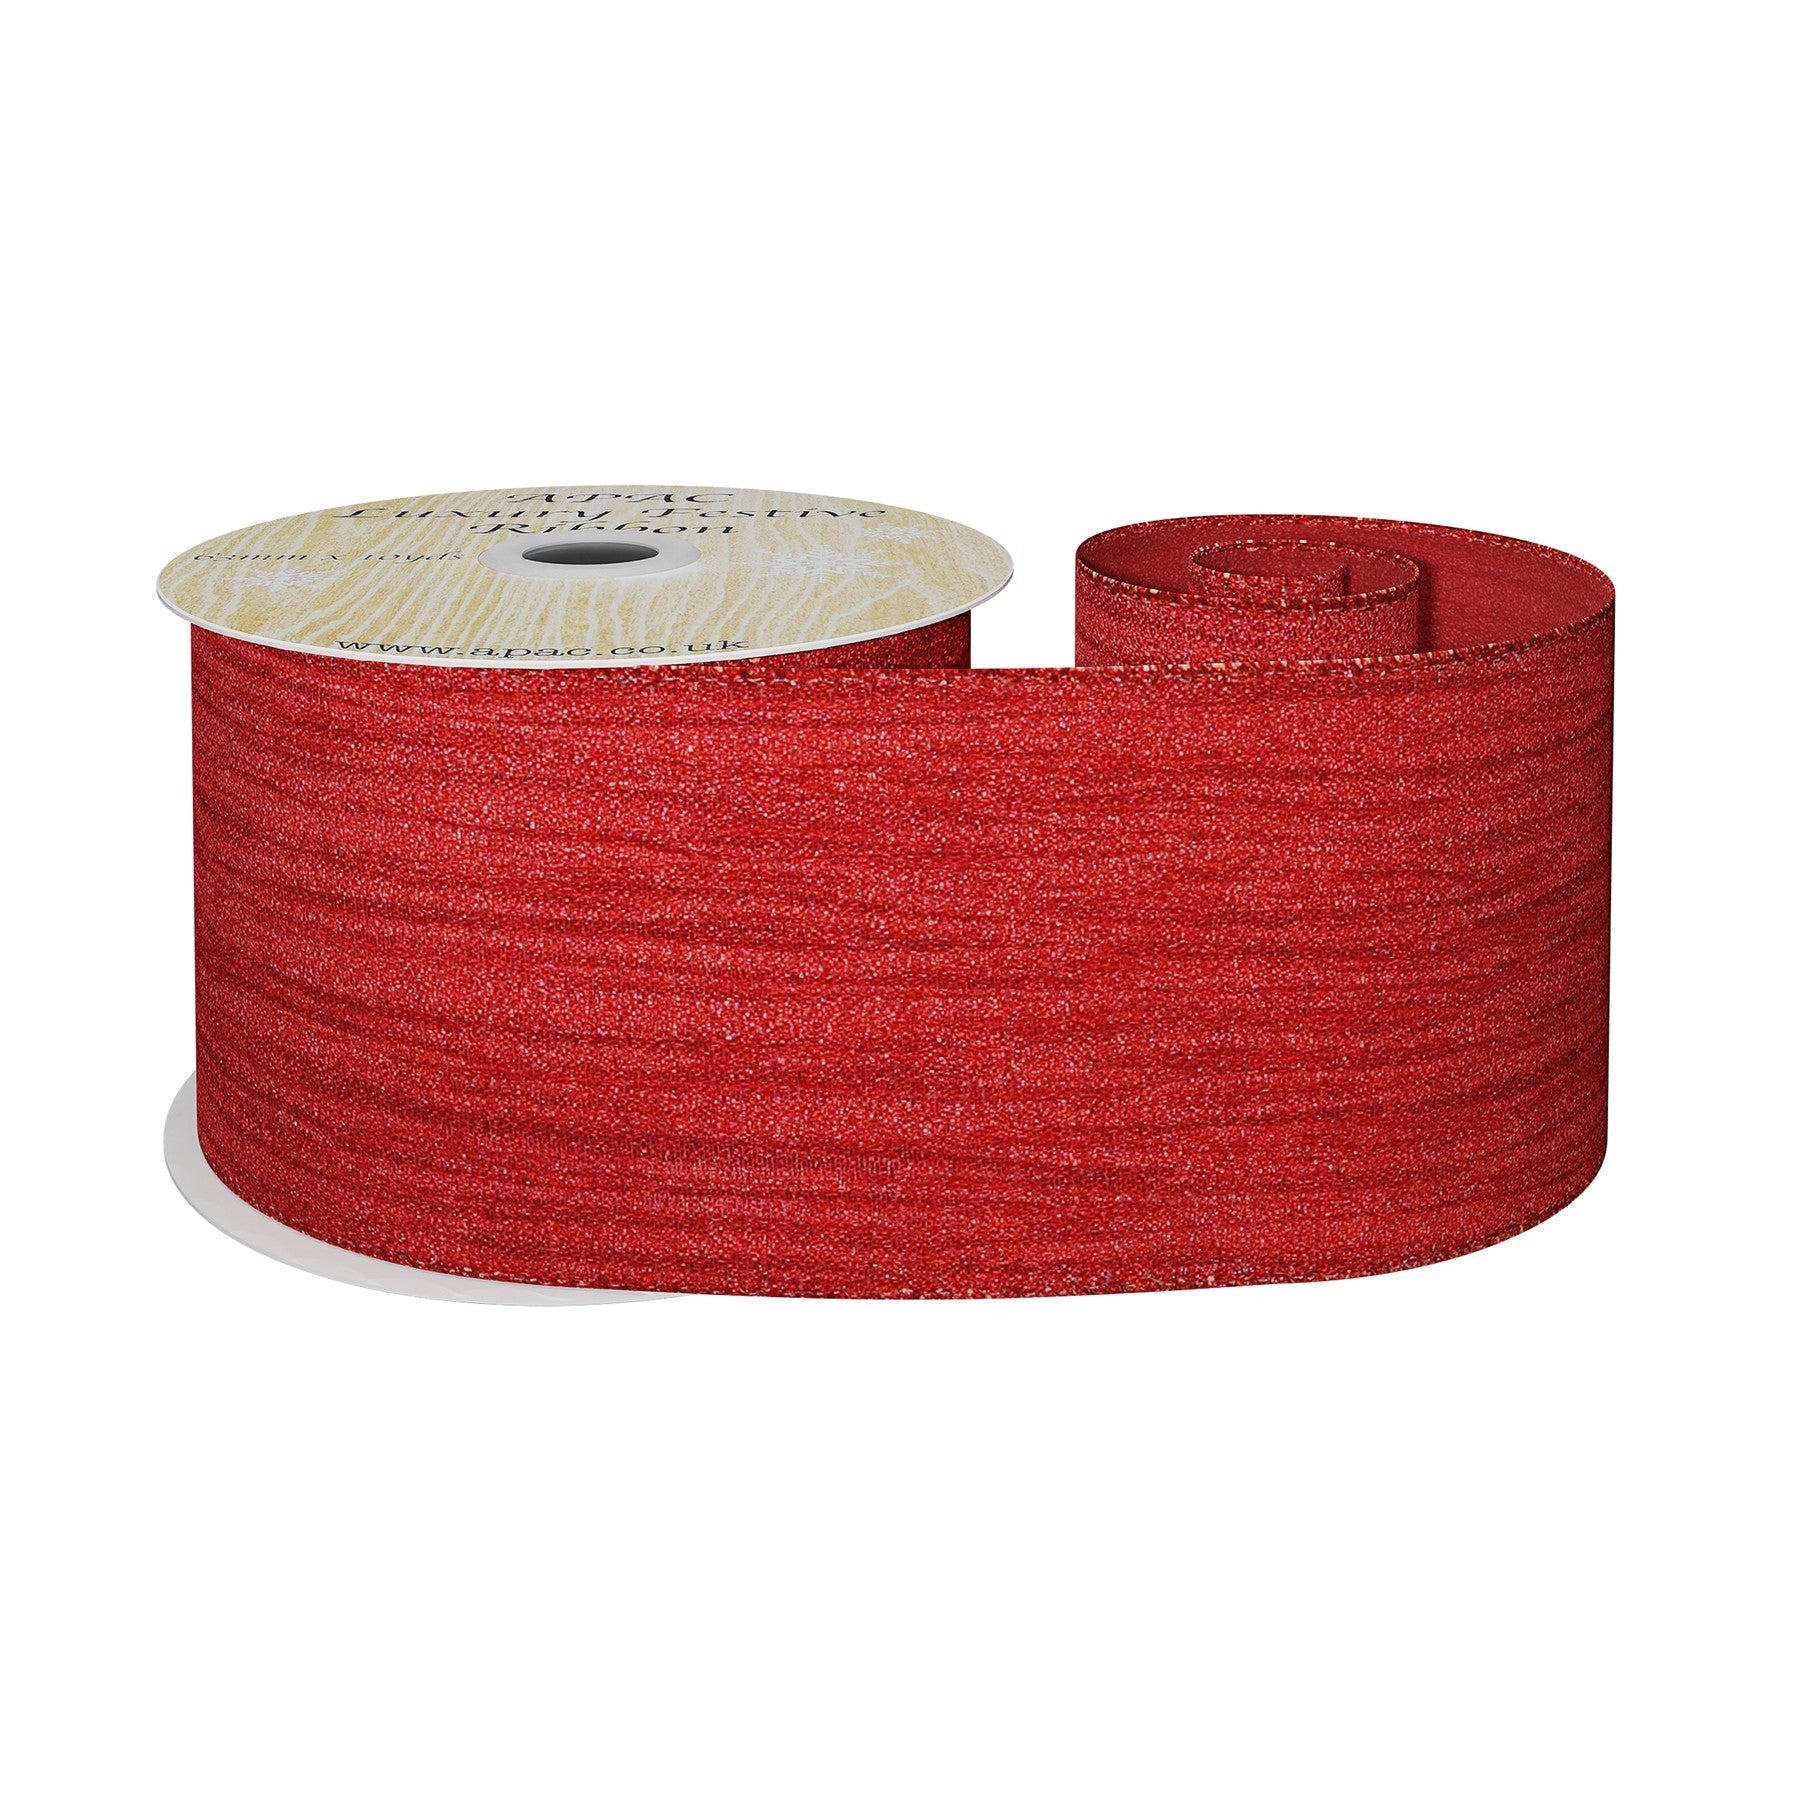 View Red Metallic Crinkle Ribbon 63mm x 10yd information